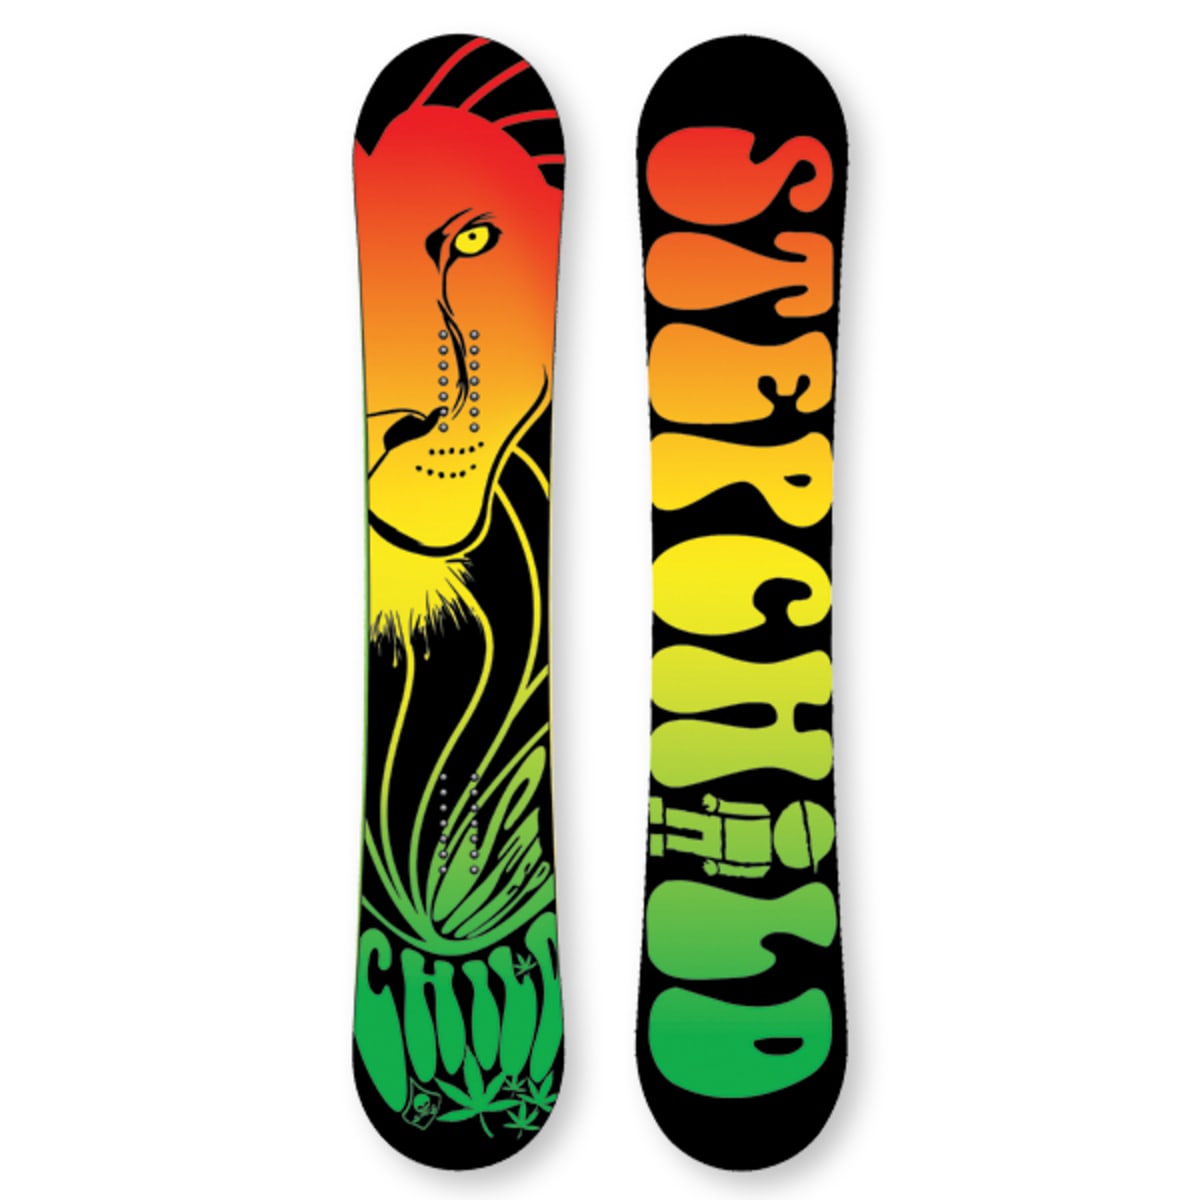 Stepchild Snowboard スノーボード152cm - スノーボード